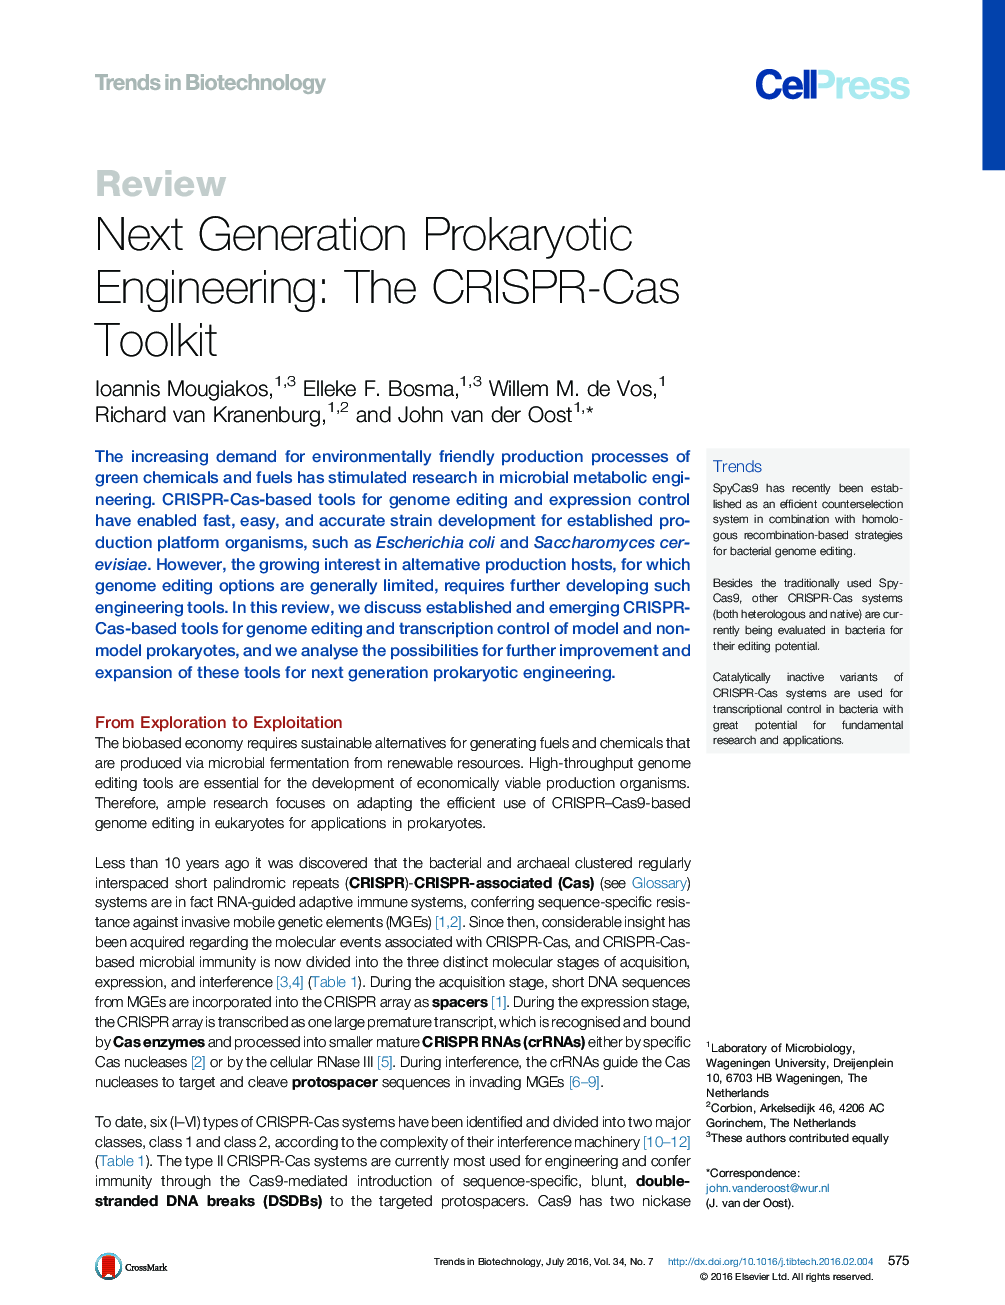 Next Generation Prokaryotic Engineering: The CRISPR-Cas Toolkit